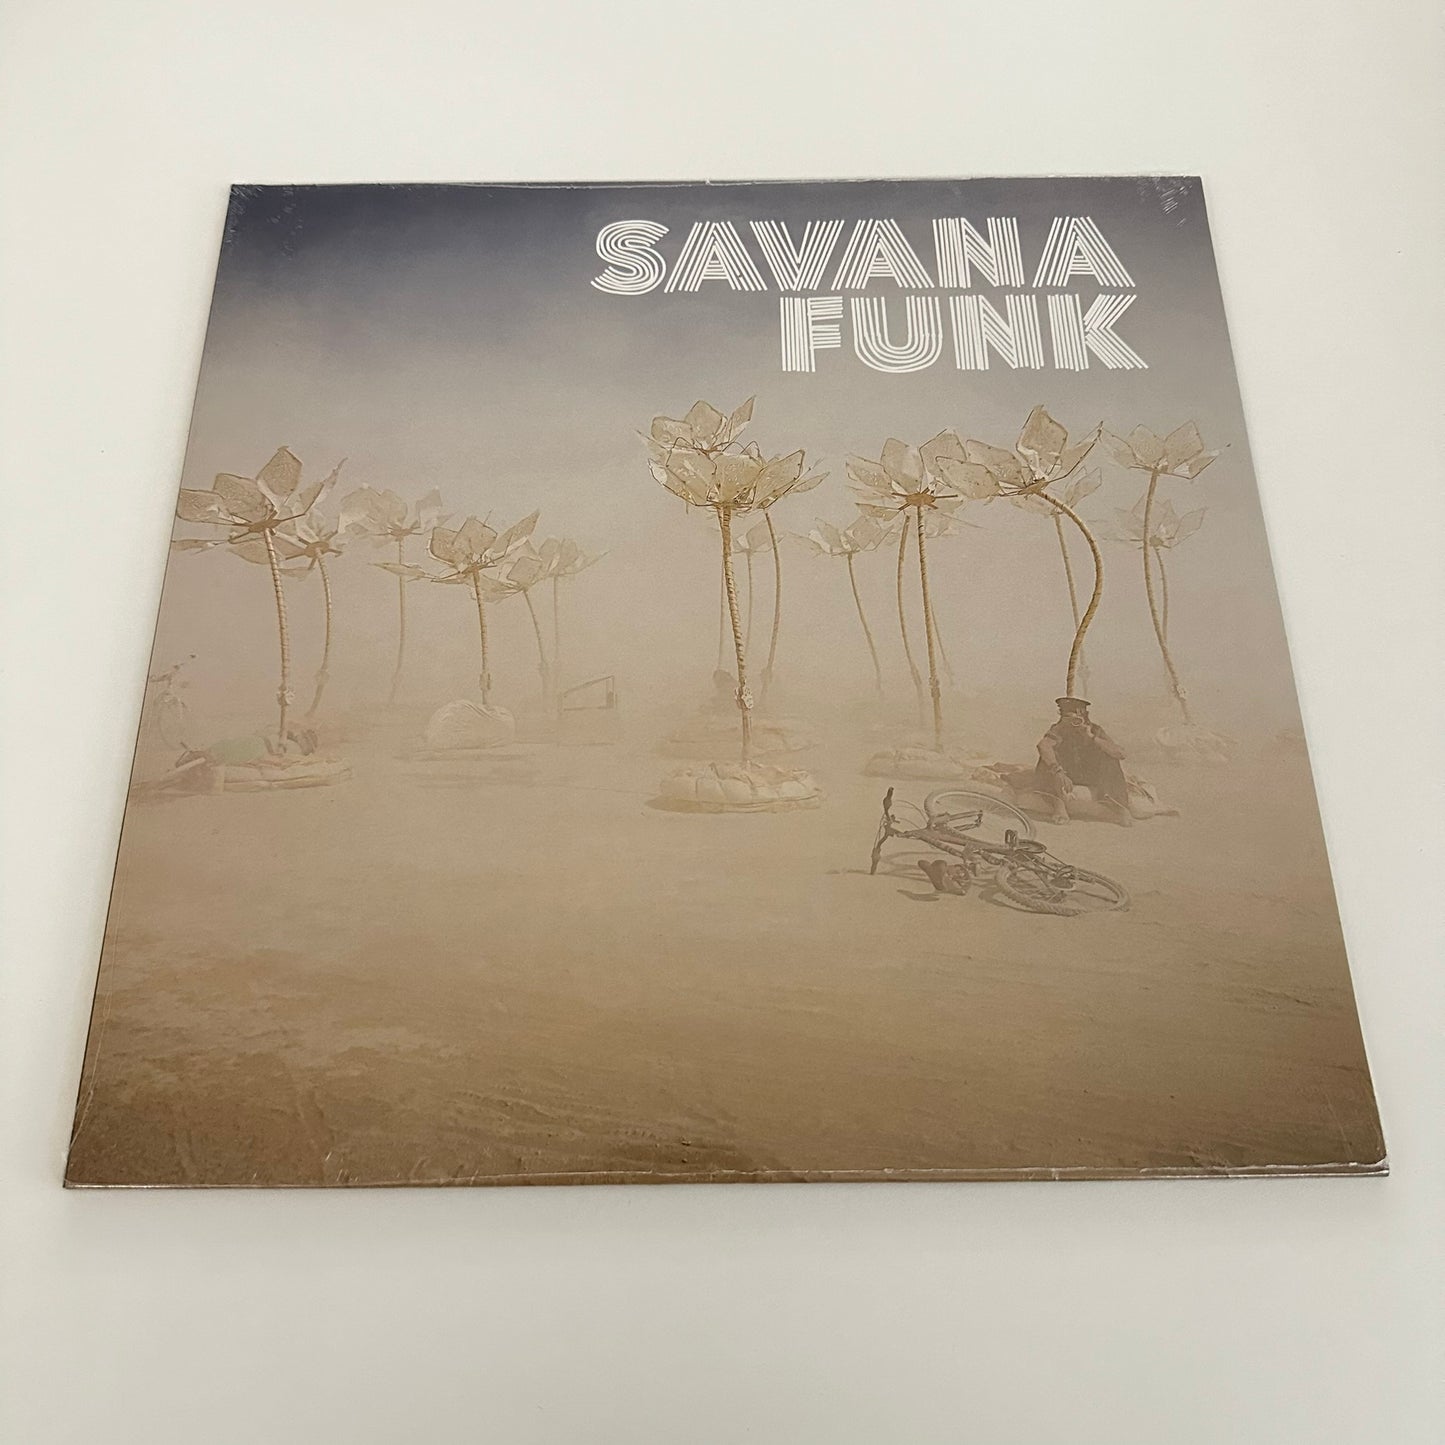 Savana Funk - Savana Funk [LP Blu]